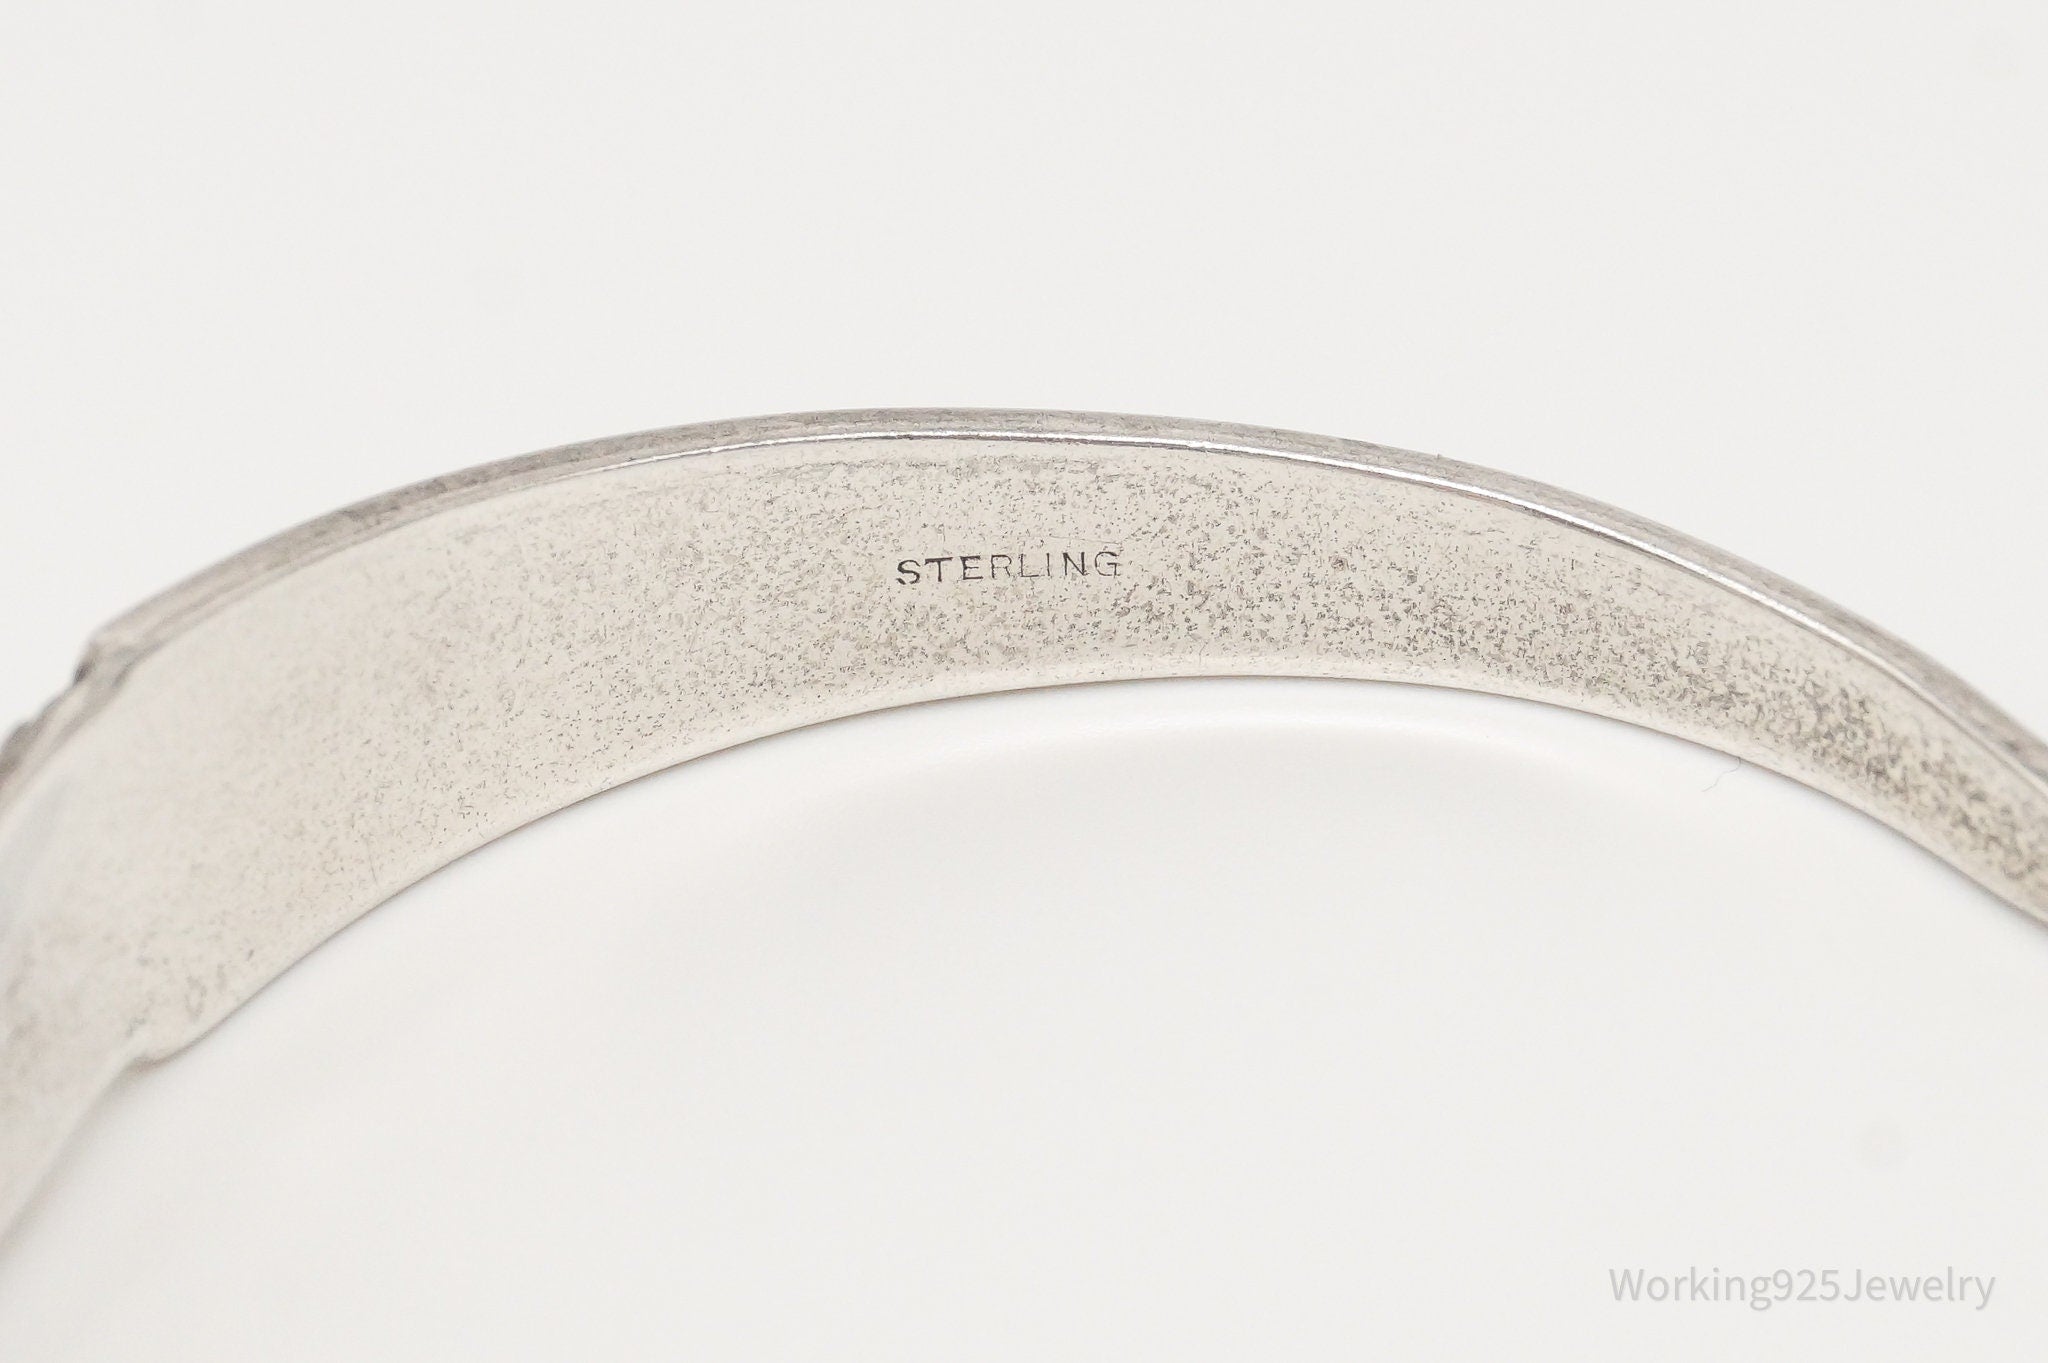 Antique Initials Name Plate Sterling Silver Cuff Bracelet